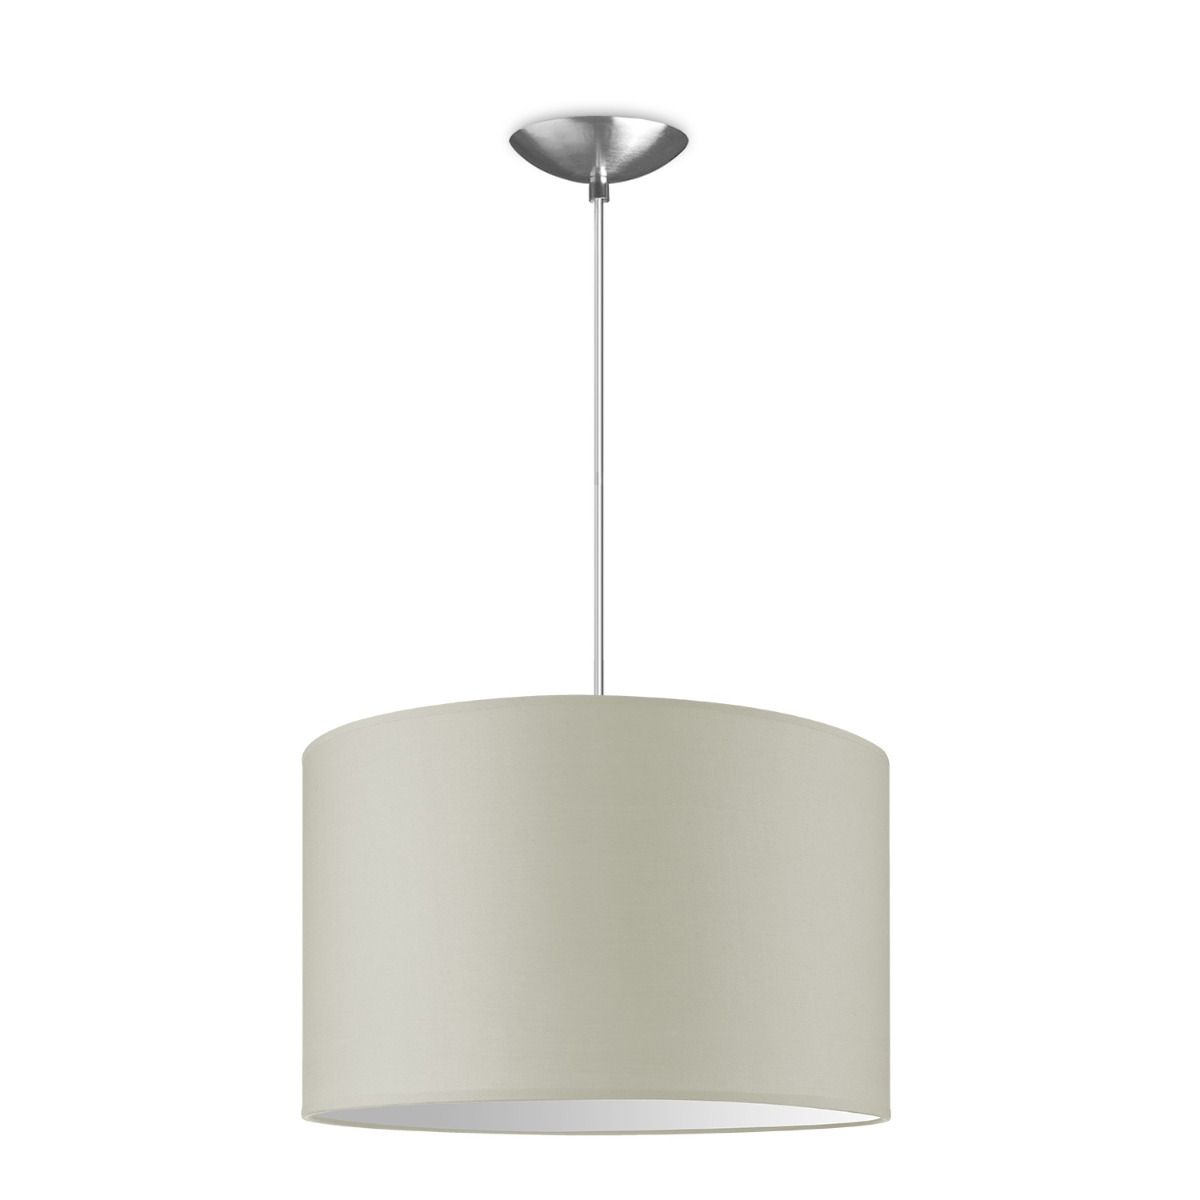 Light depot - hanglamp basic bling Ø 35 cm - warmwit - Outlet